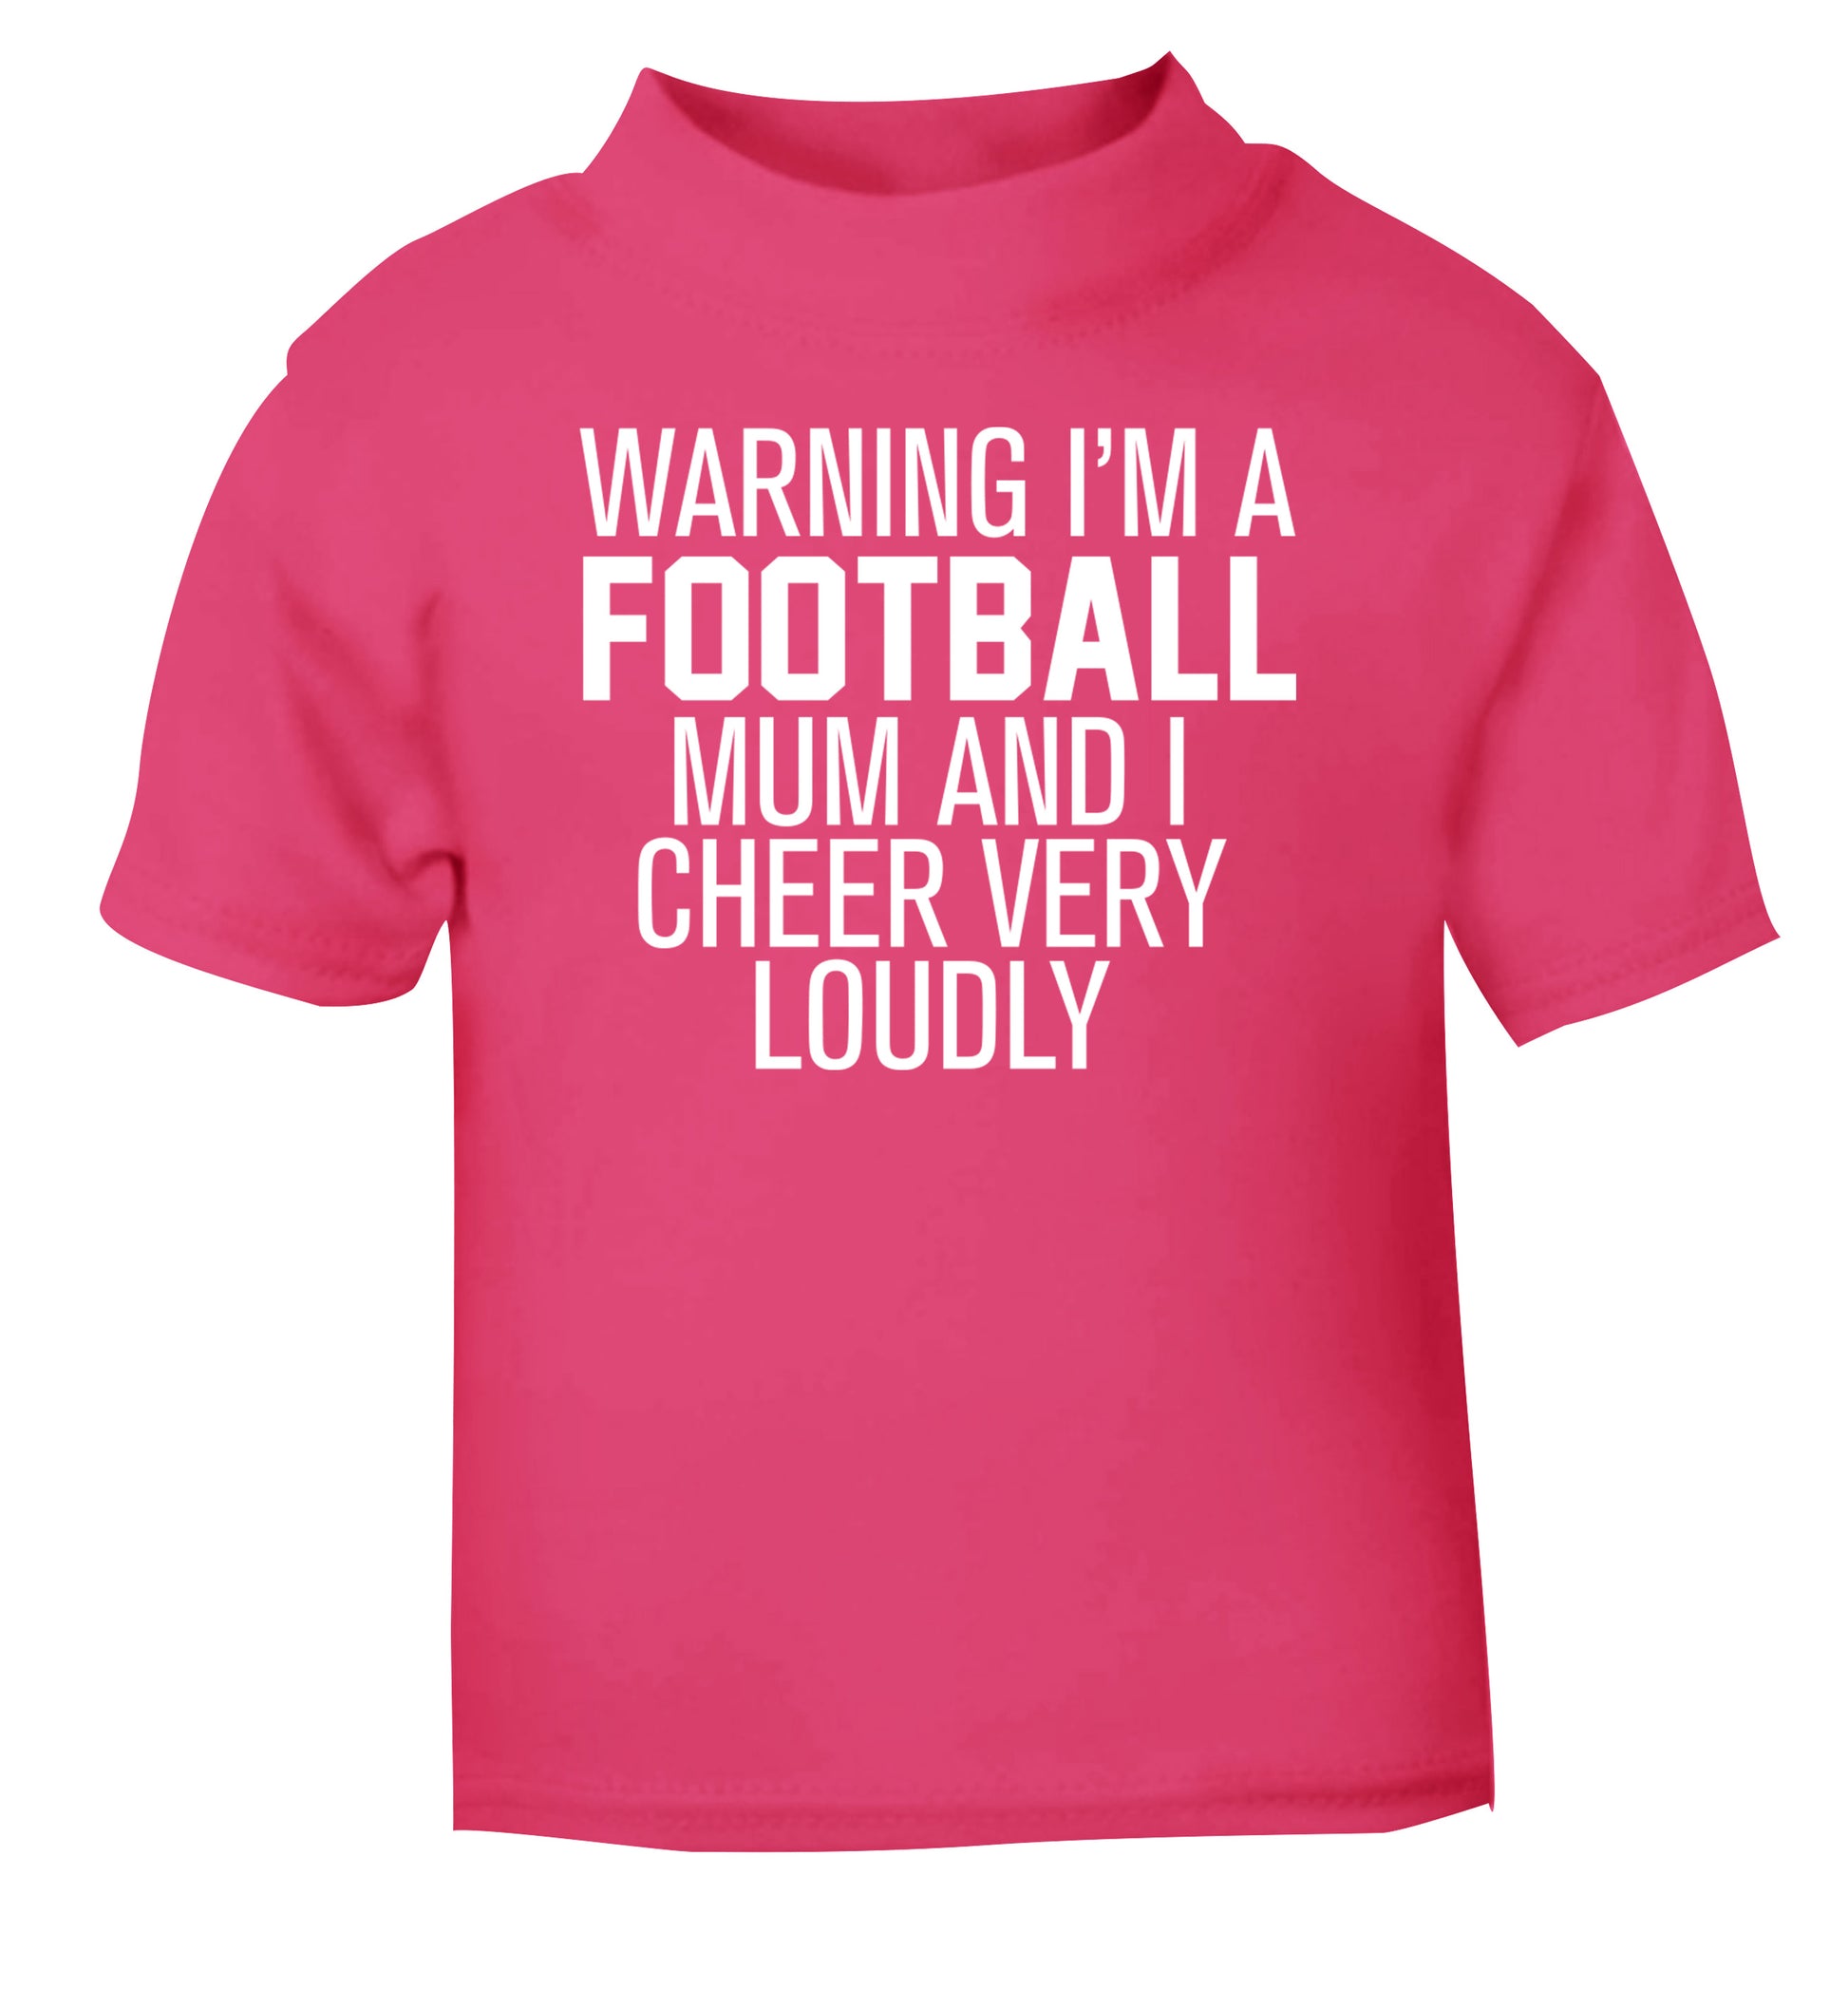 Warning I'm a football mum and I cheer very loudly pink Baby Toddler Tshirt 2 Years